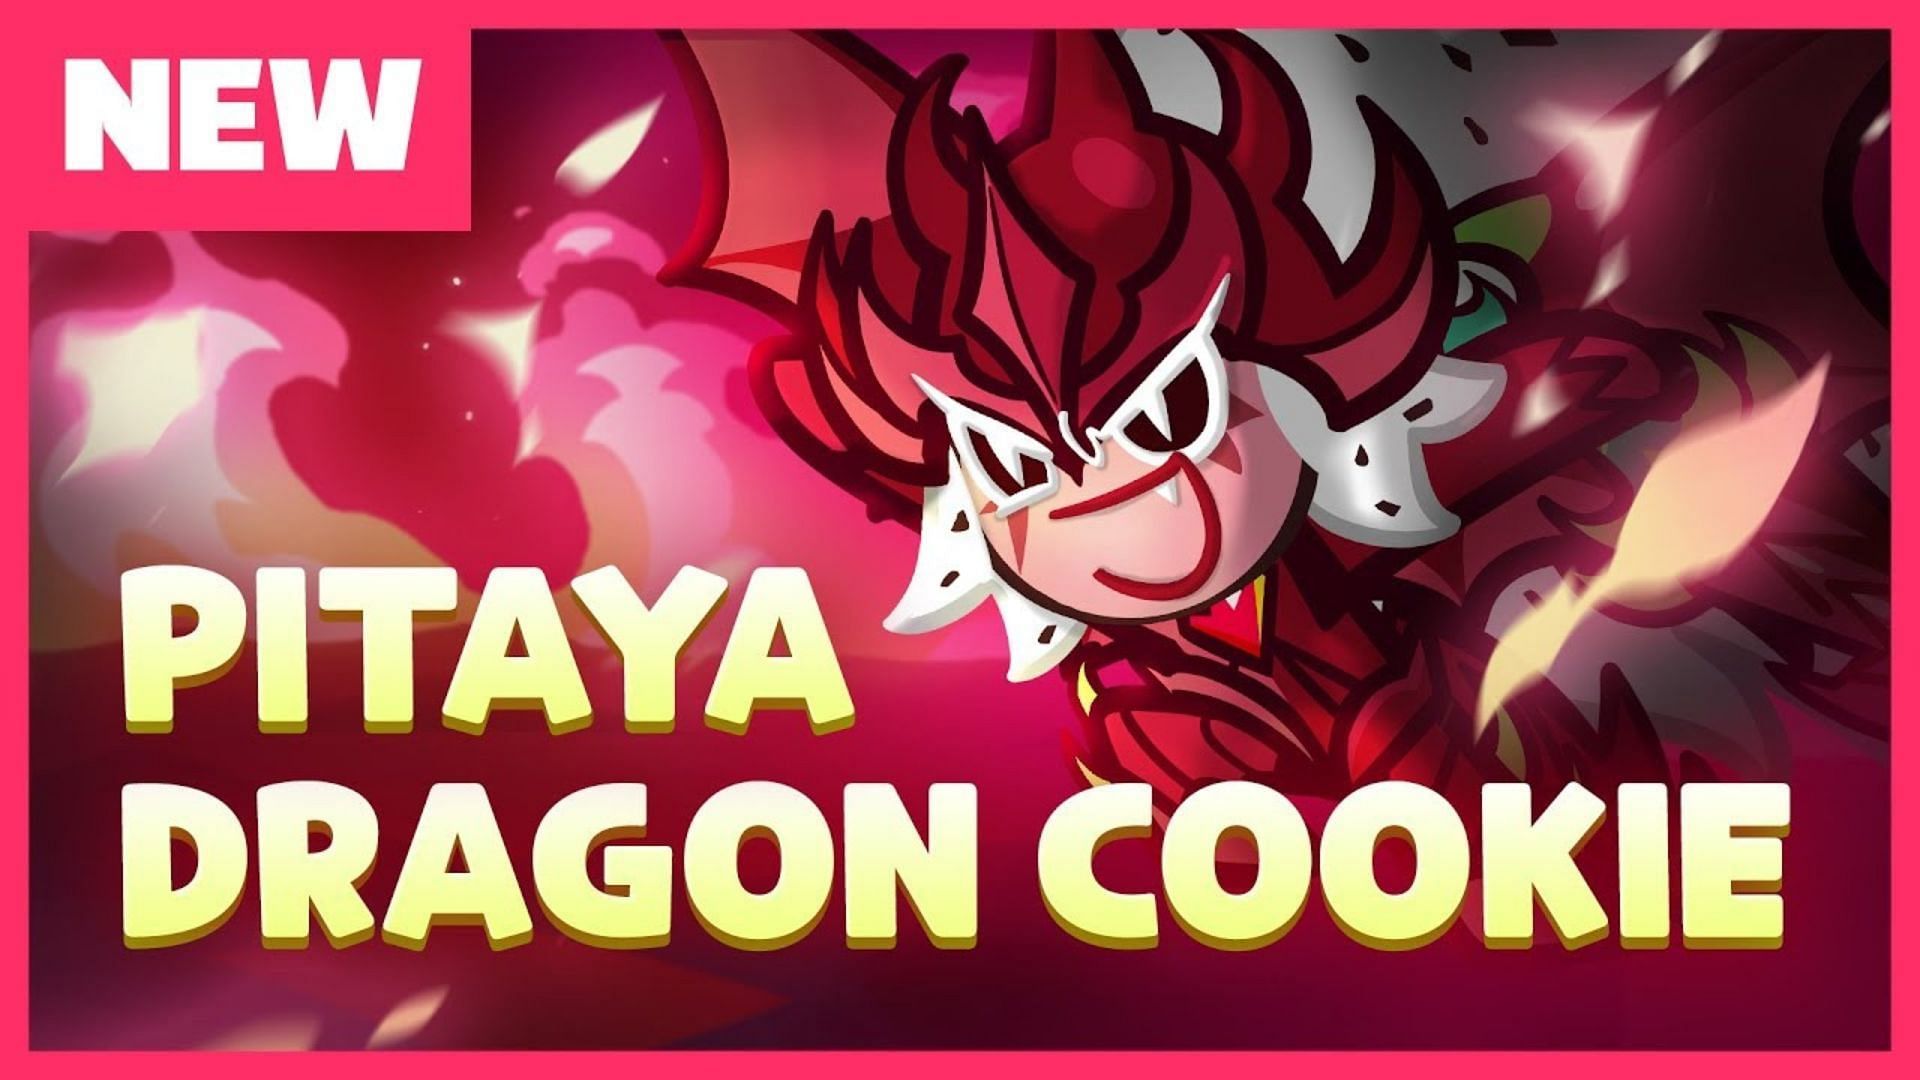 Pitaya Dragon was already an established character in CRK